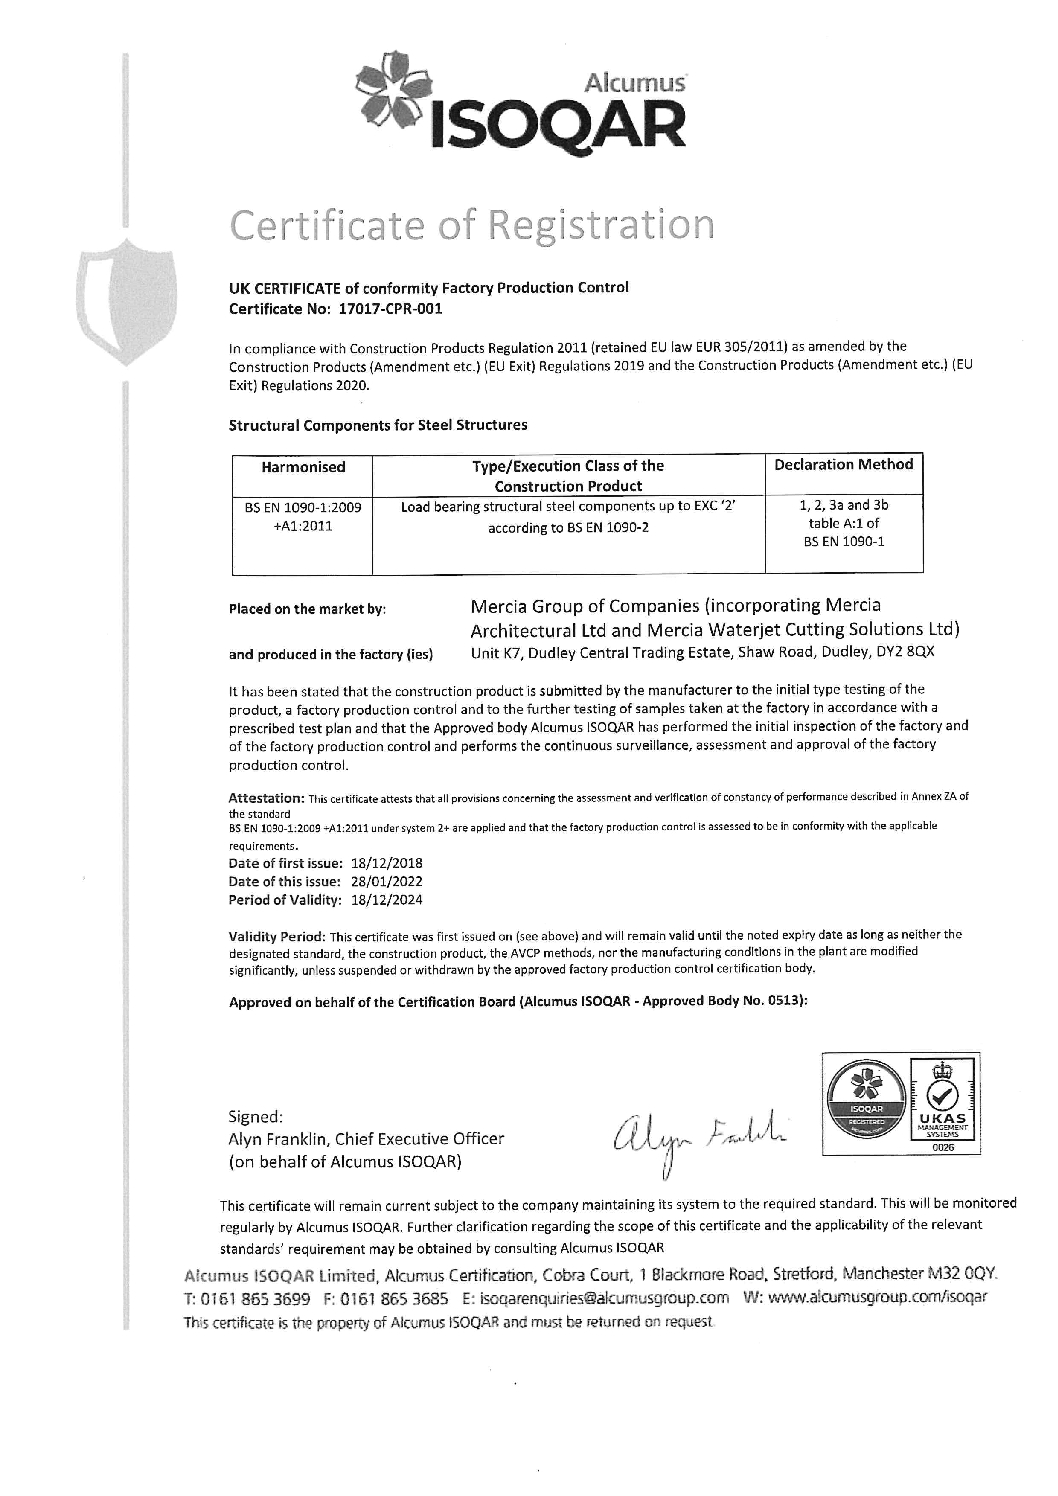 ISOQUAR-EN-1090-Certificate-pdf.jpg